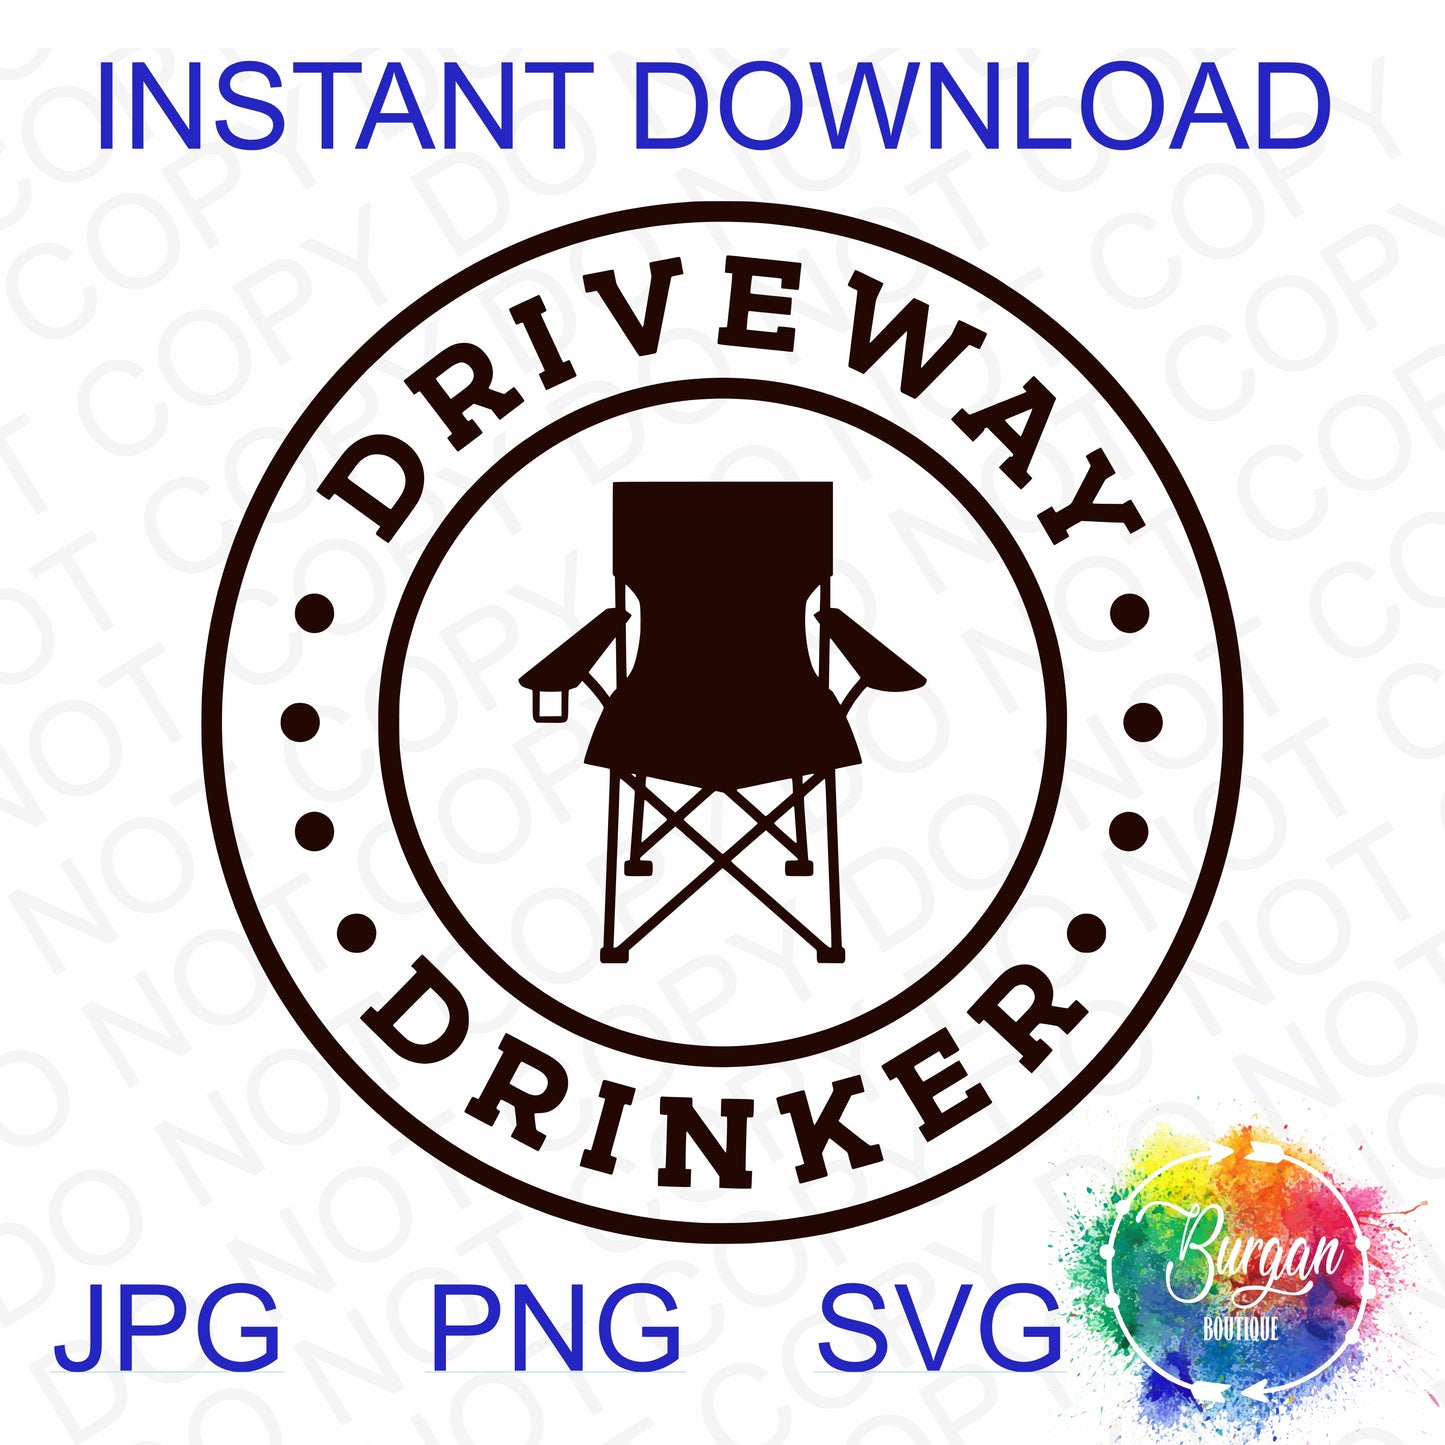 Driveway Drinker Instant Digital Download